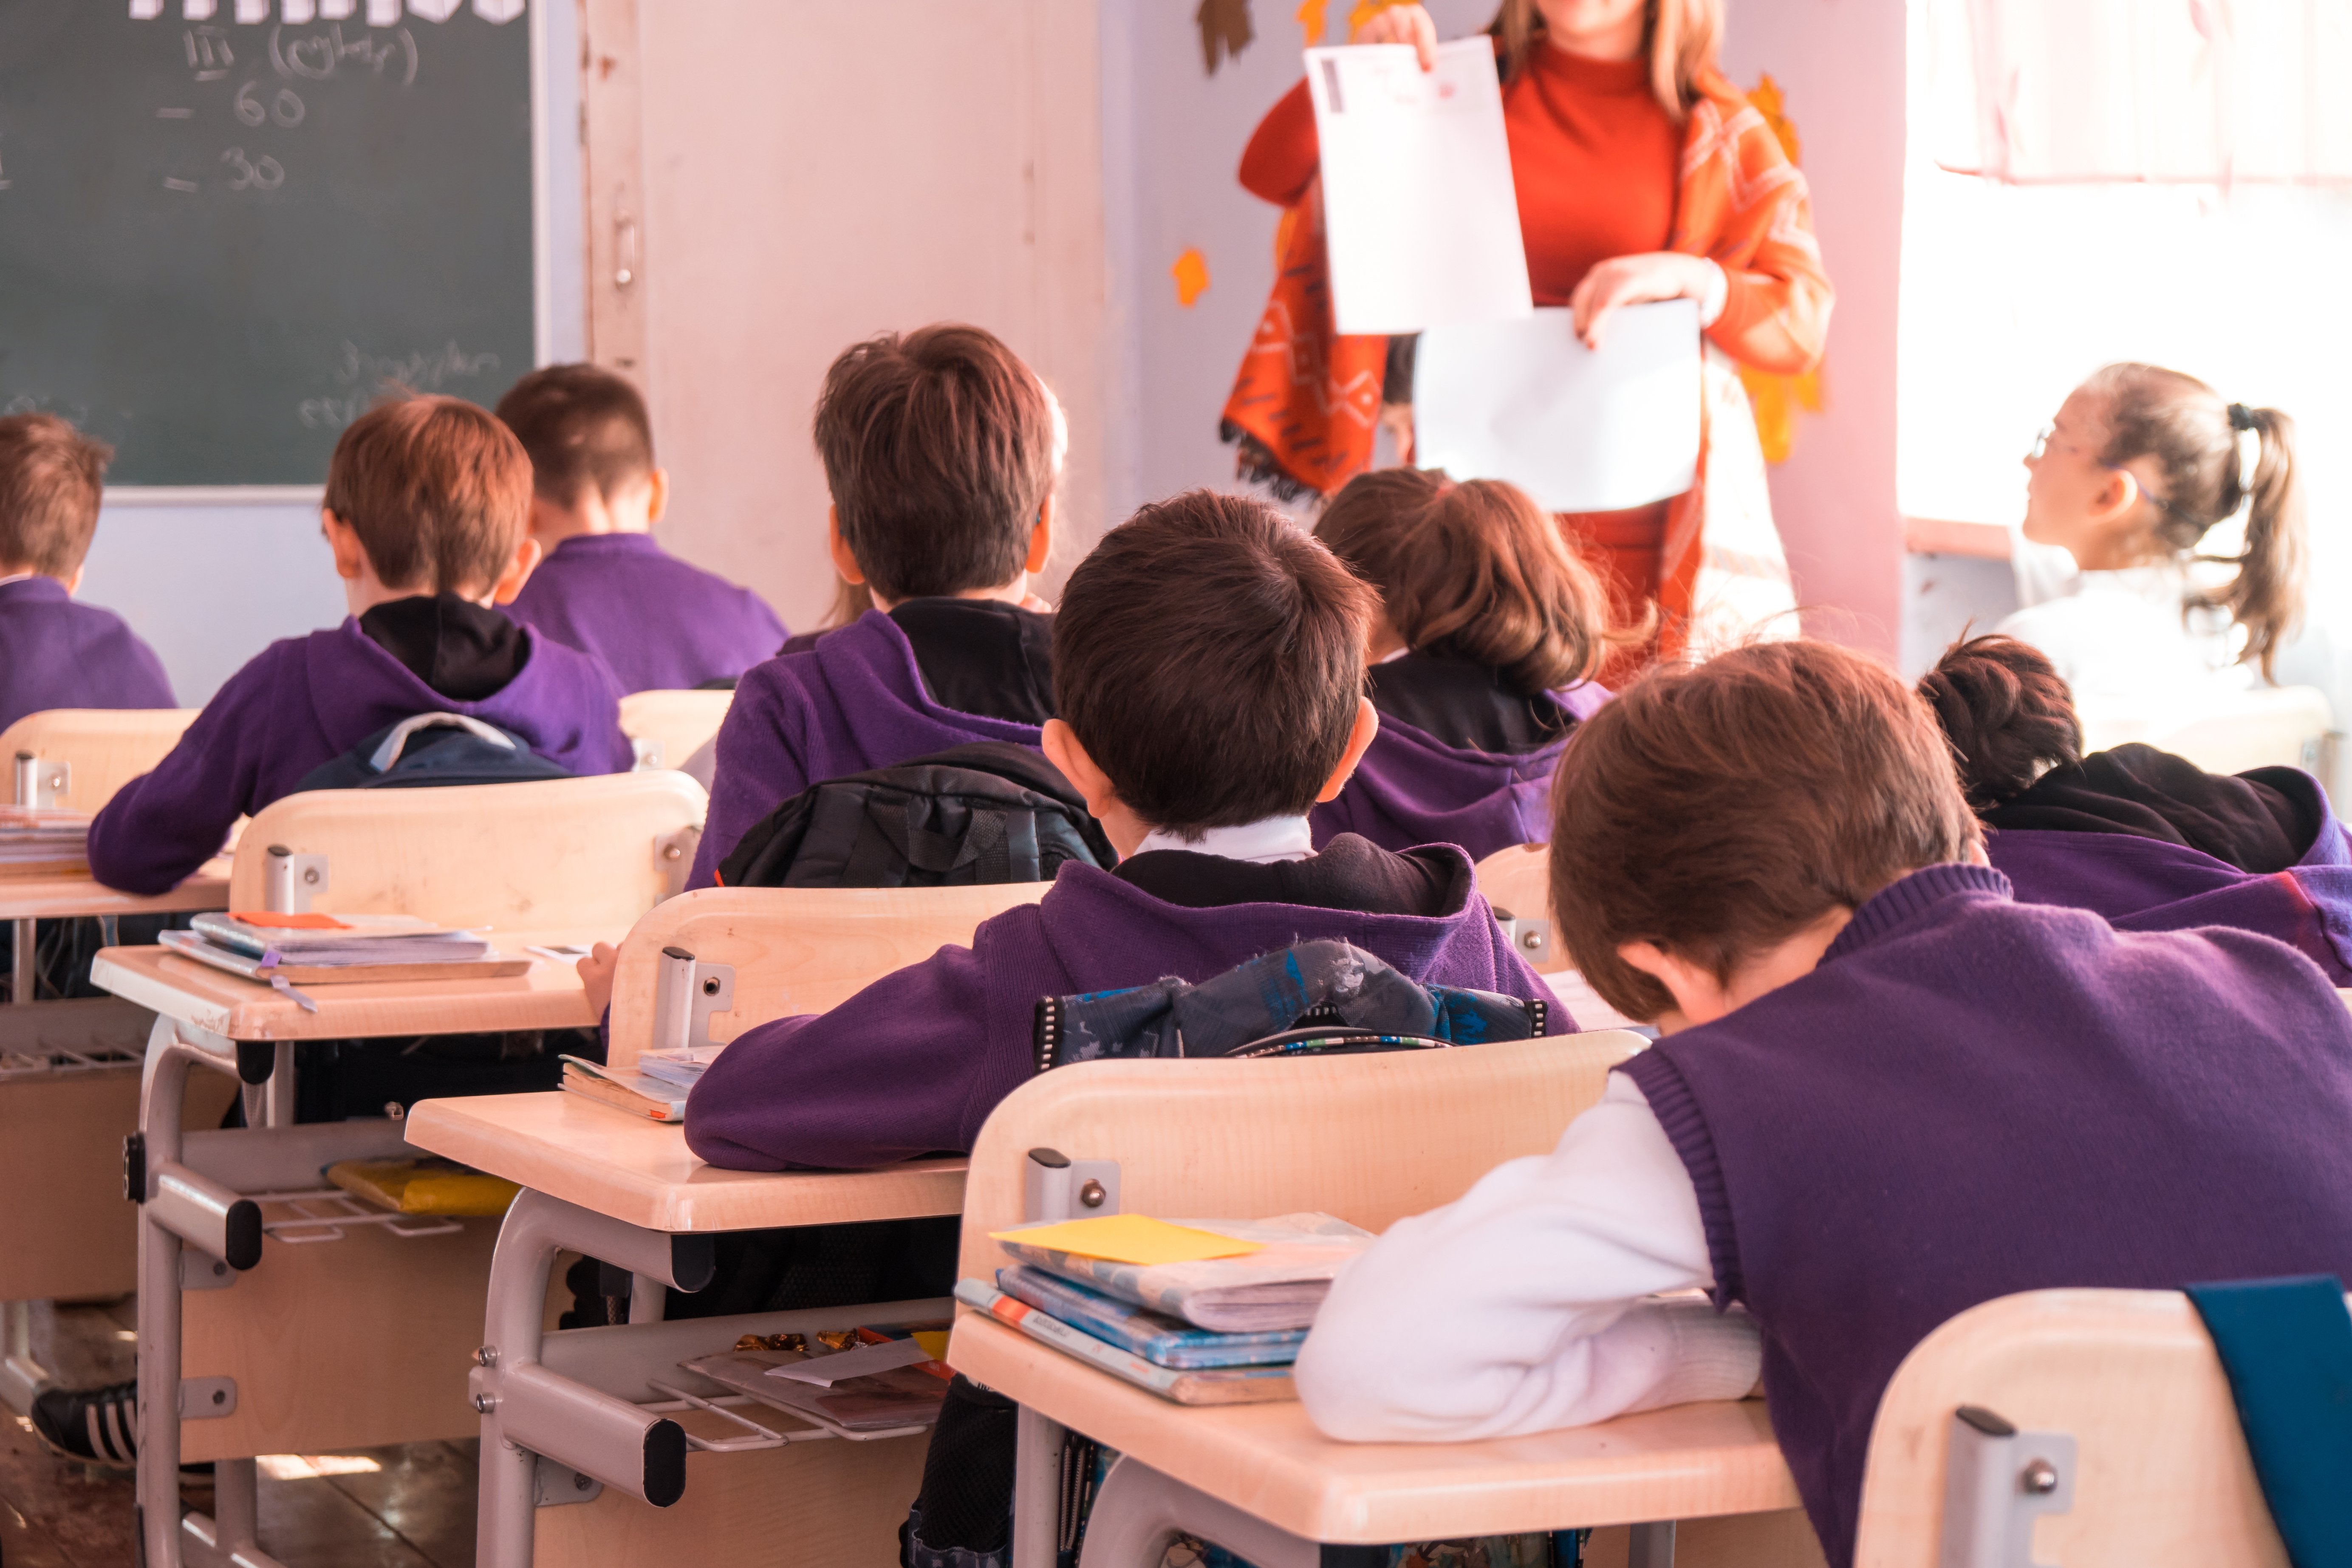 School children participating actively in class | Shutterstock.com